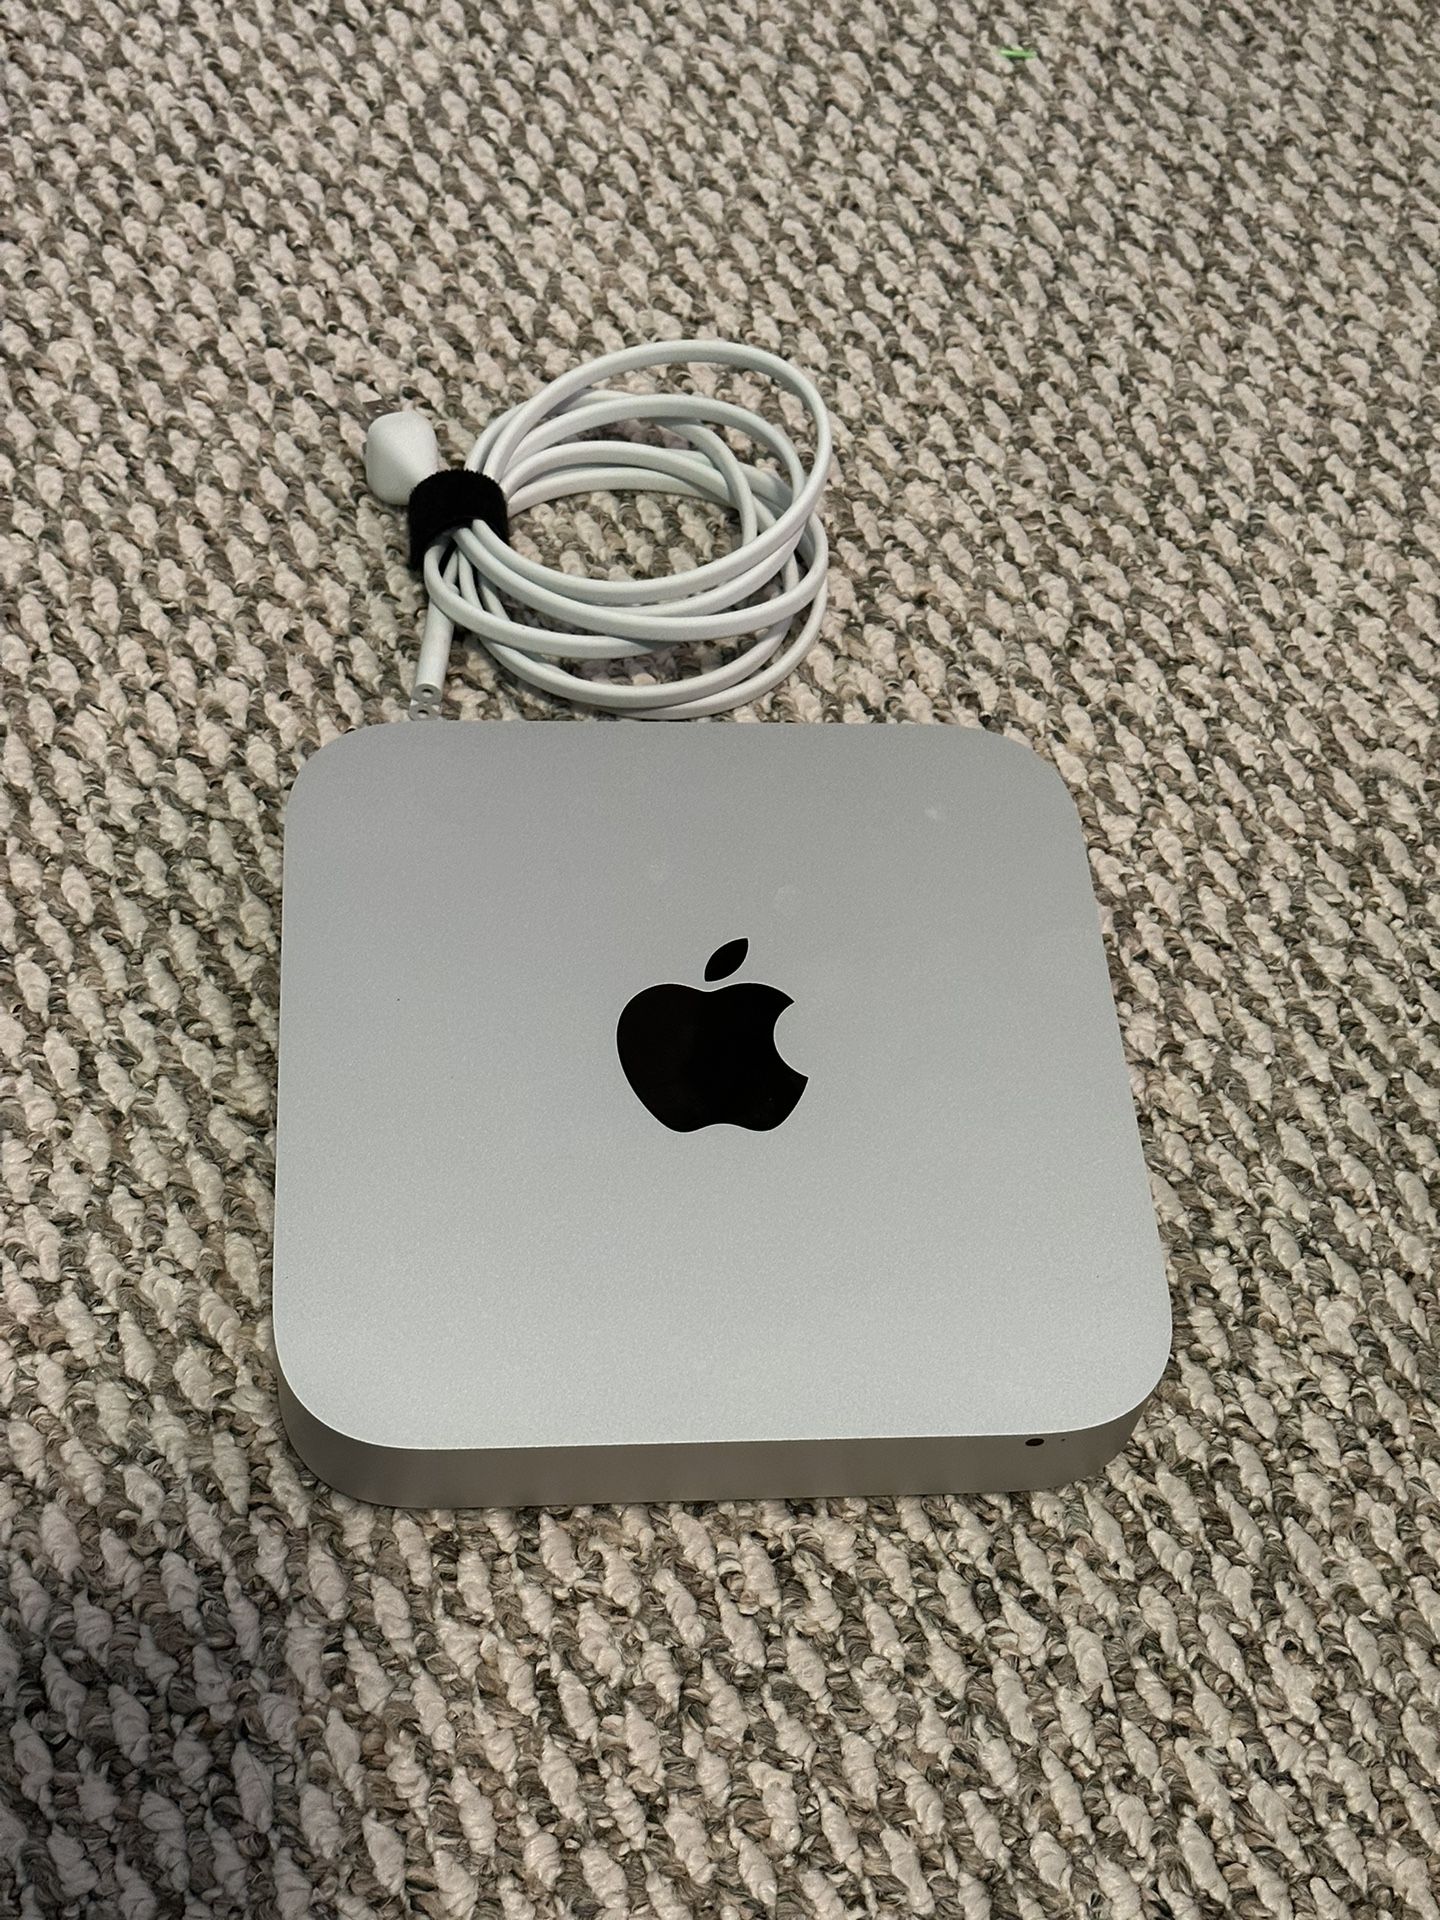 Mac Mini (late 2014)